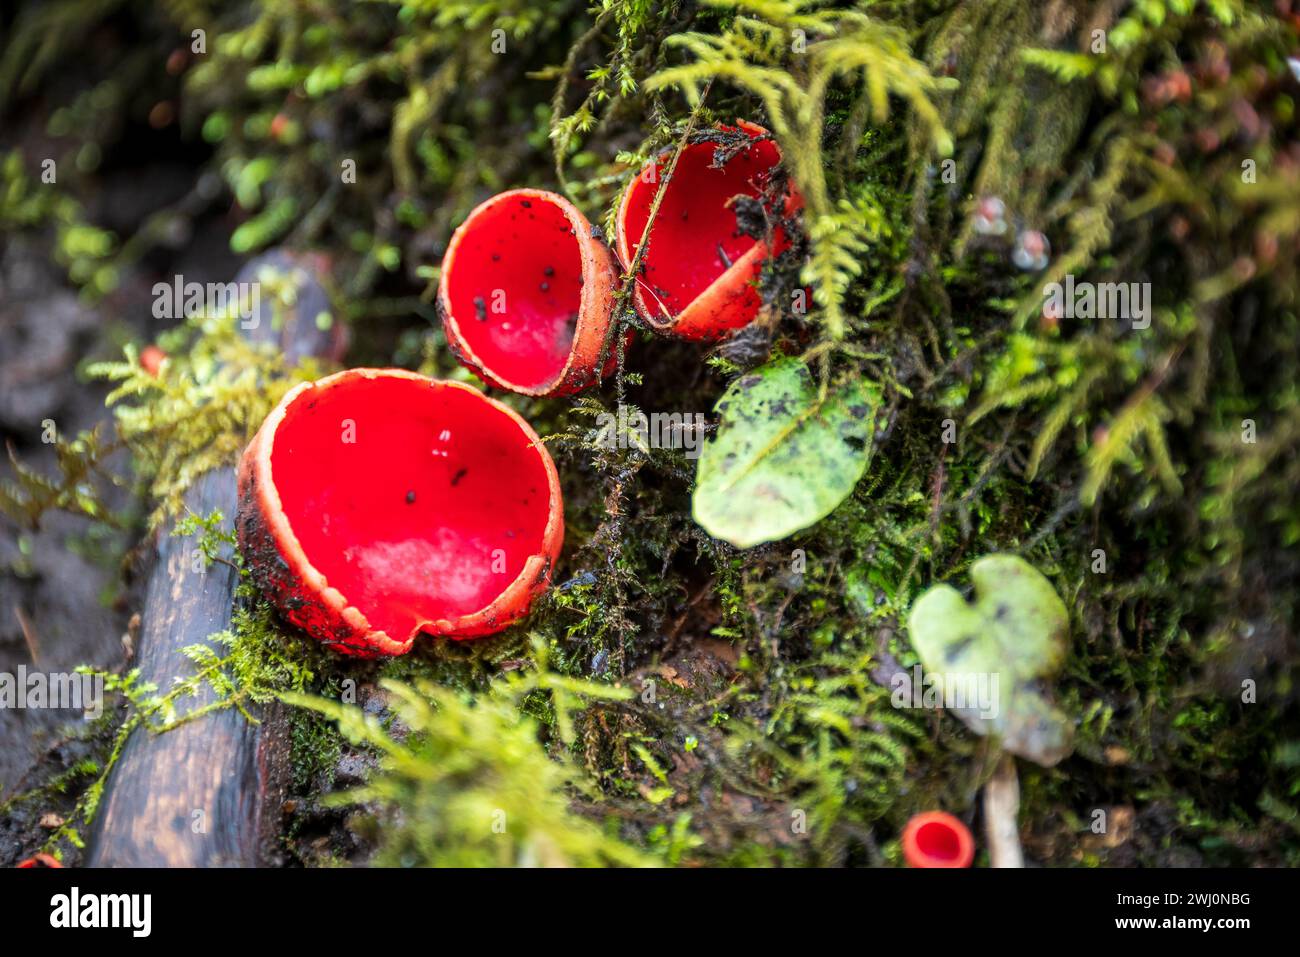 Elf cup or Scarlet elf cup fungus. Stock Photo